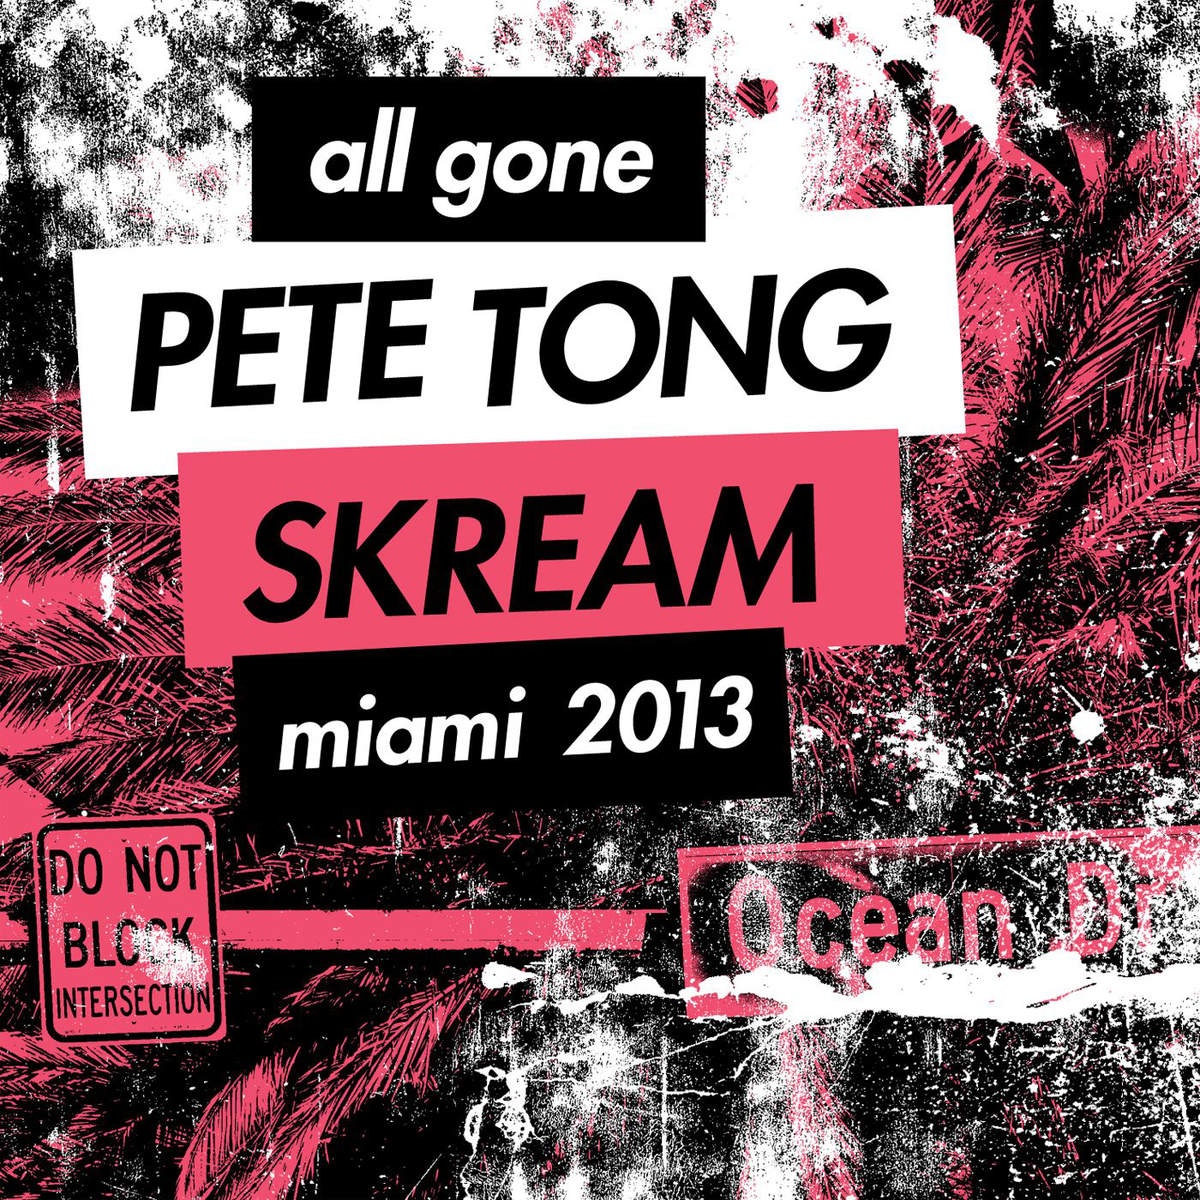 All Gone Pete Tong & Skream Miami 2013 (Skream Mix)